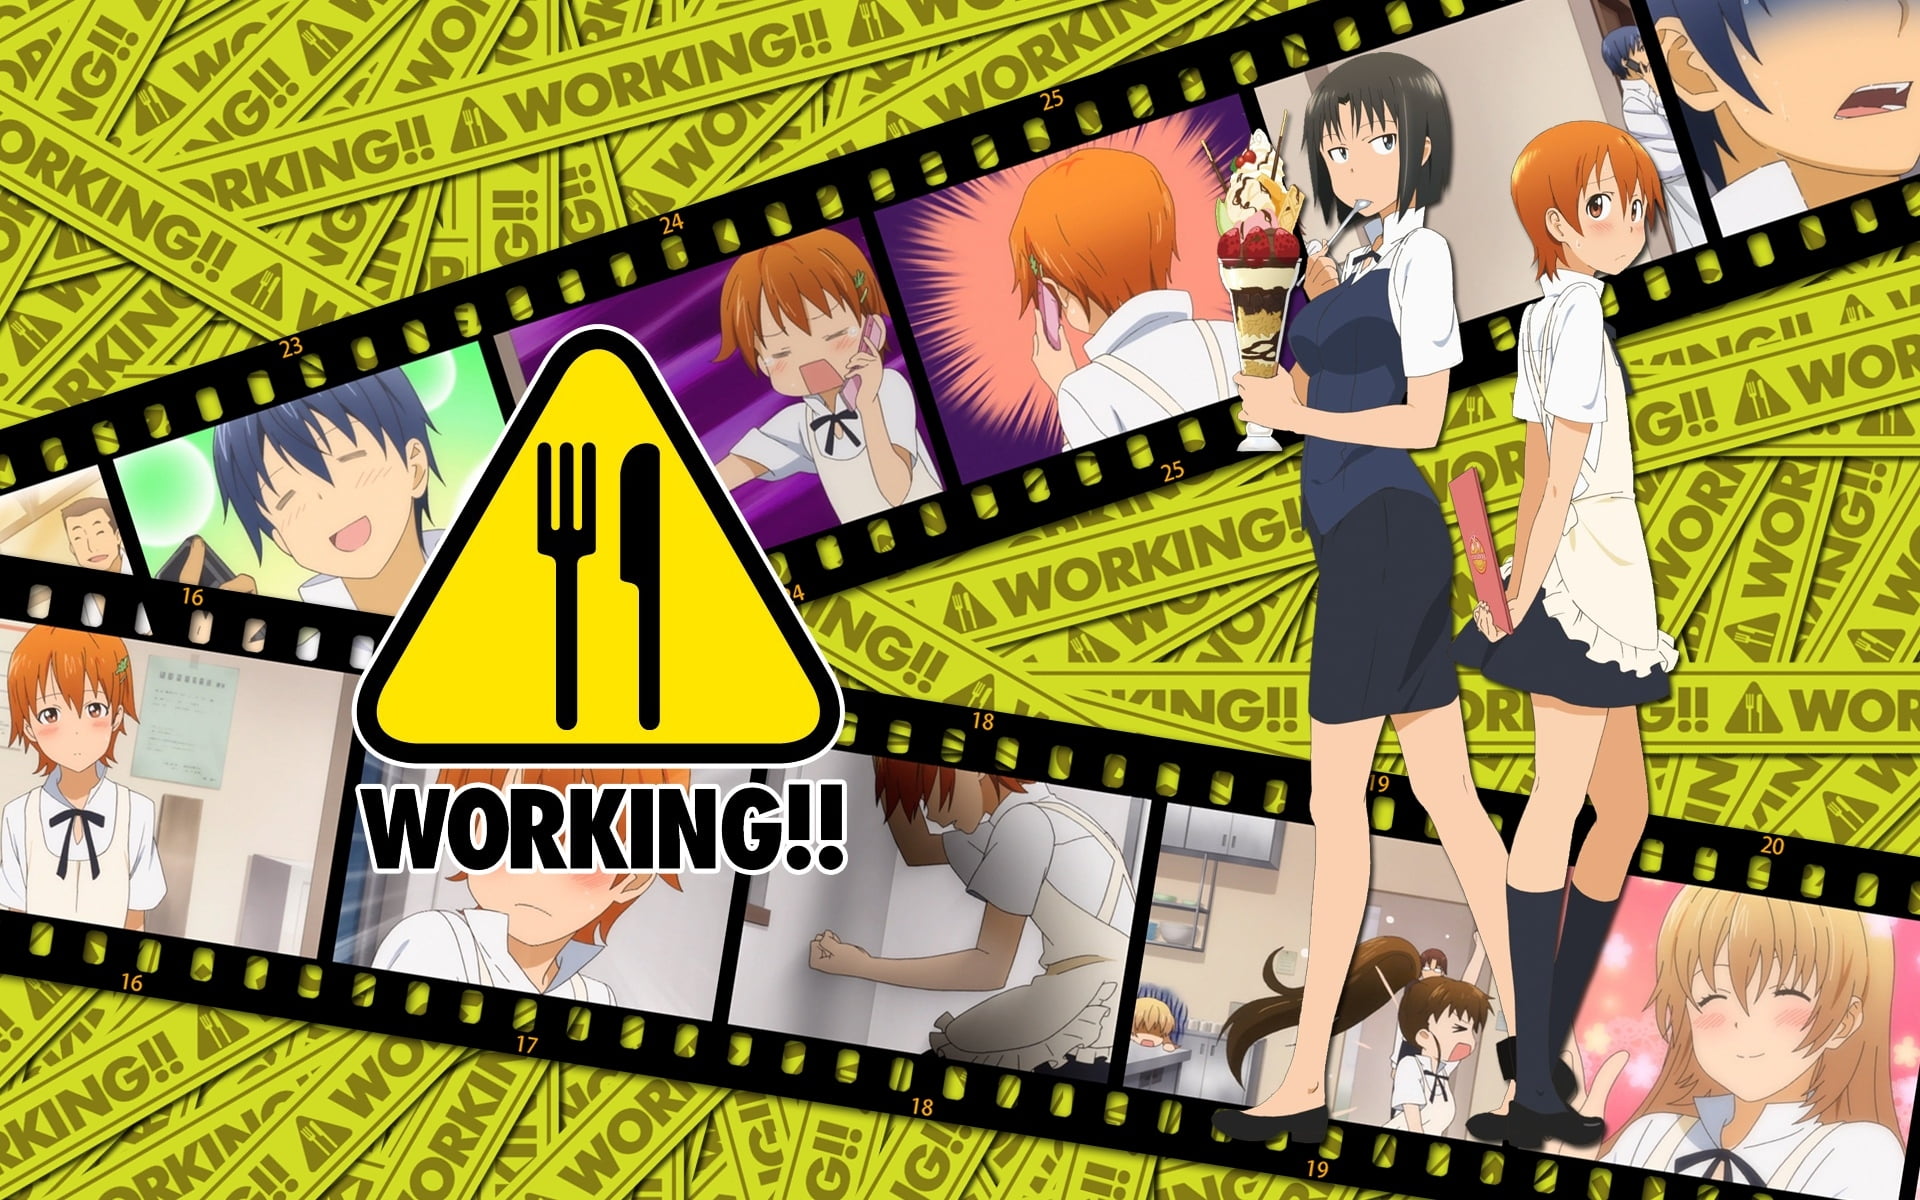 Working anime digital wallpaper